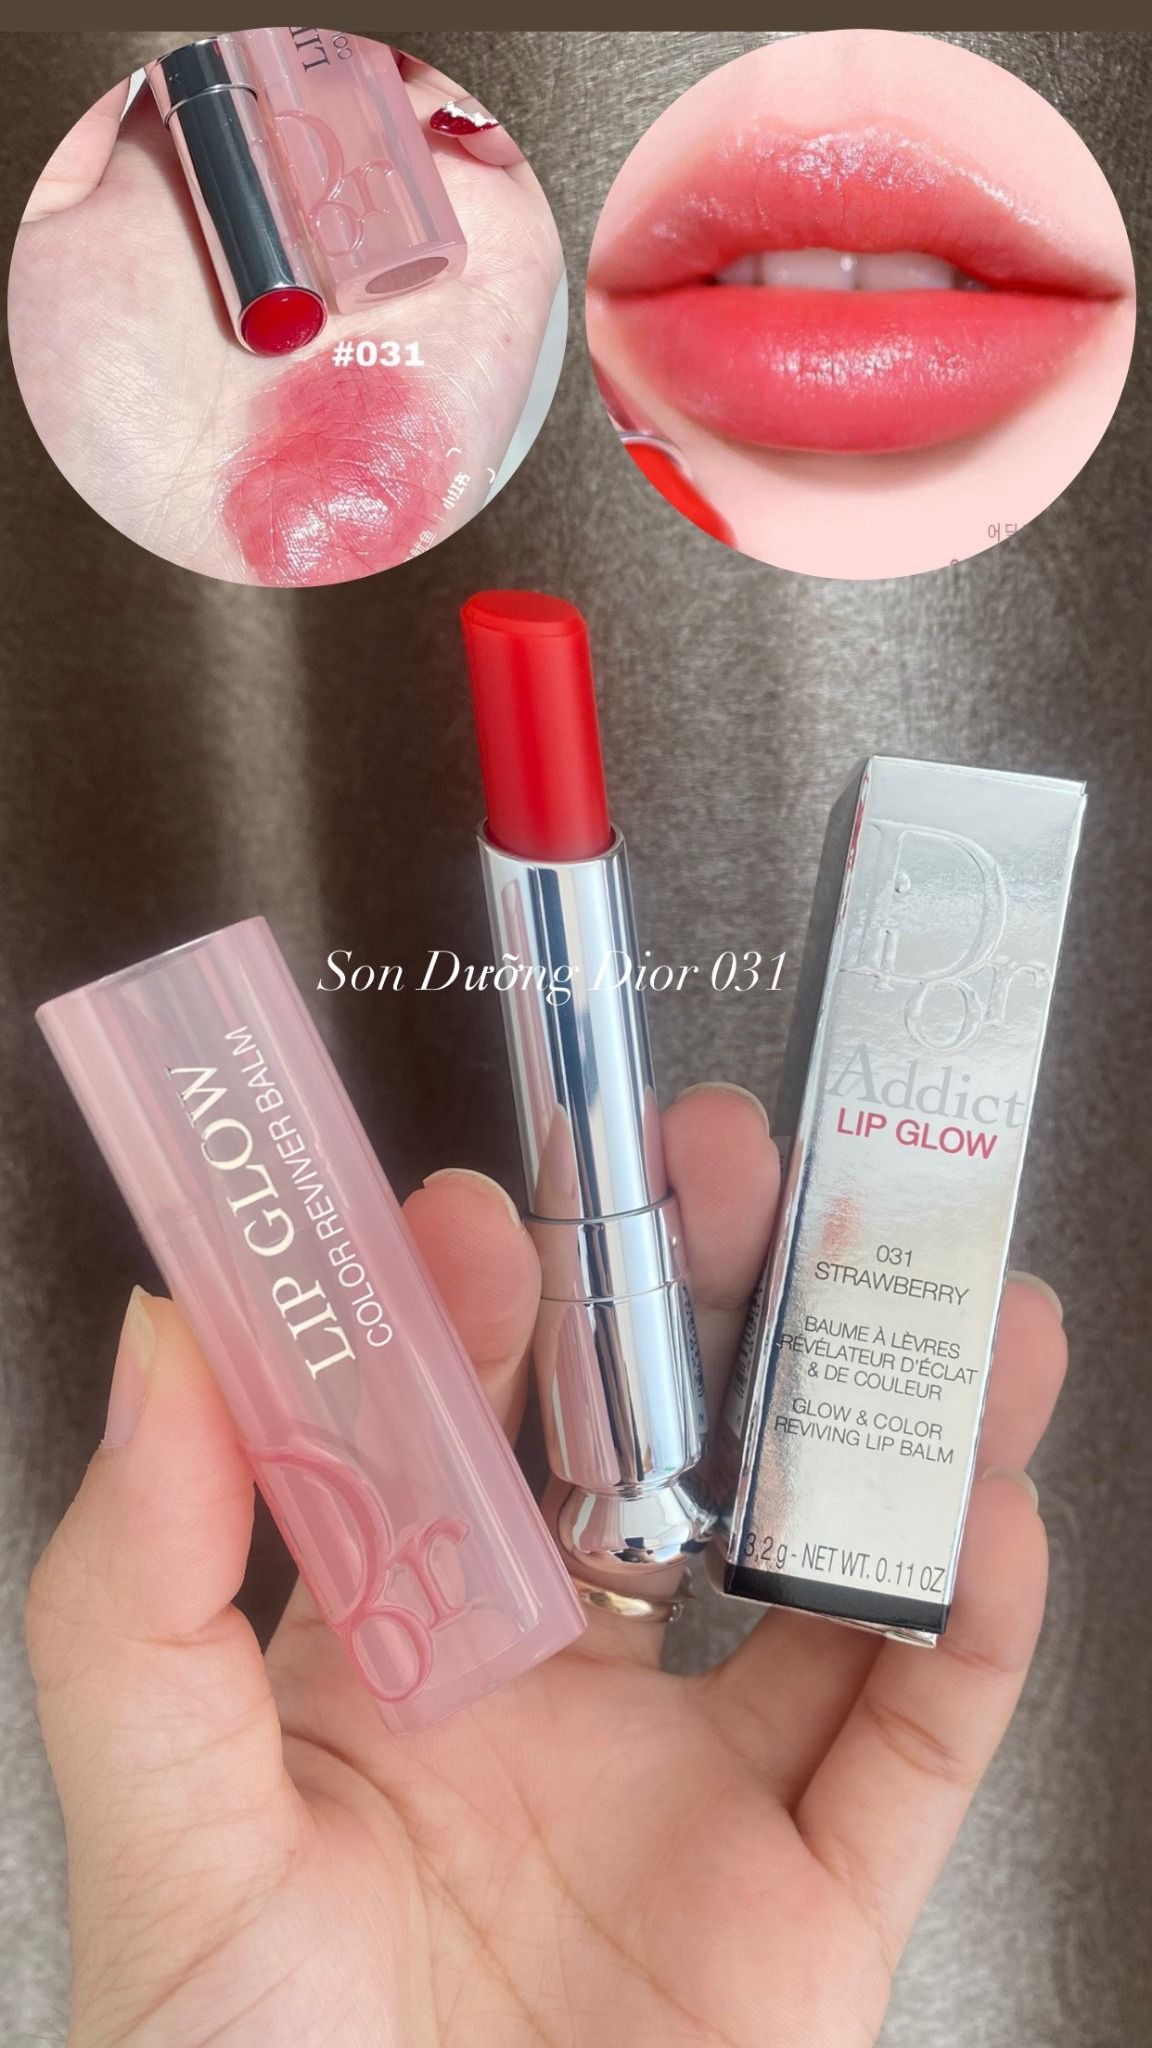  Son Dưỡng Dior Addict Lip Glow 031 Color Reviver Balm Strawberry – Màu Đỏ Dâu 